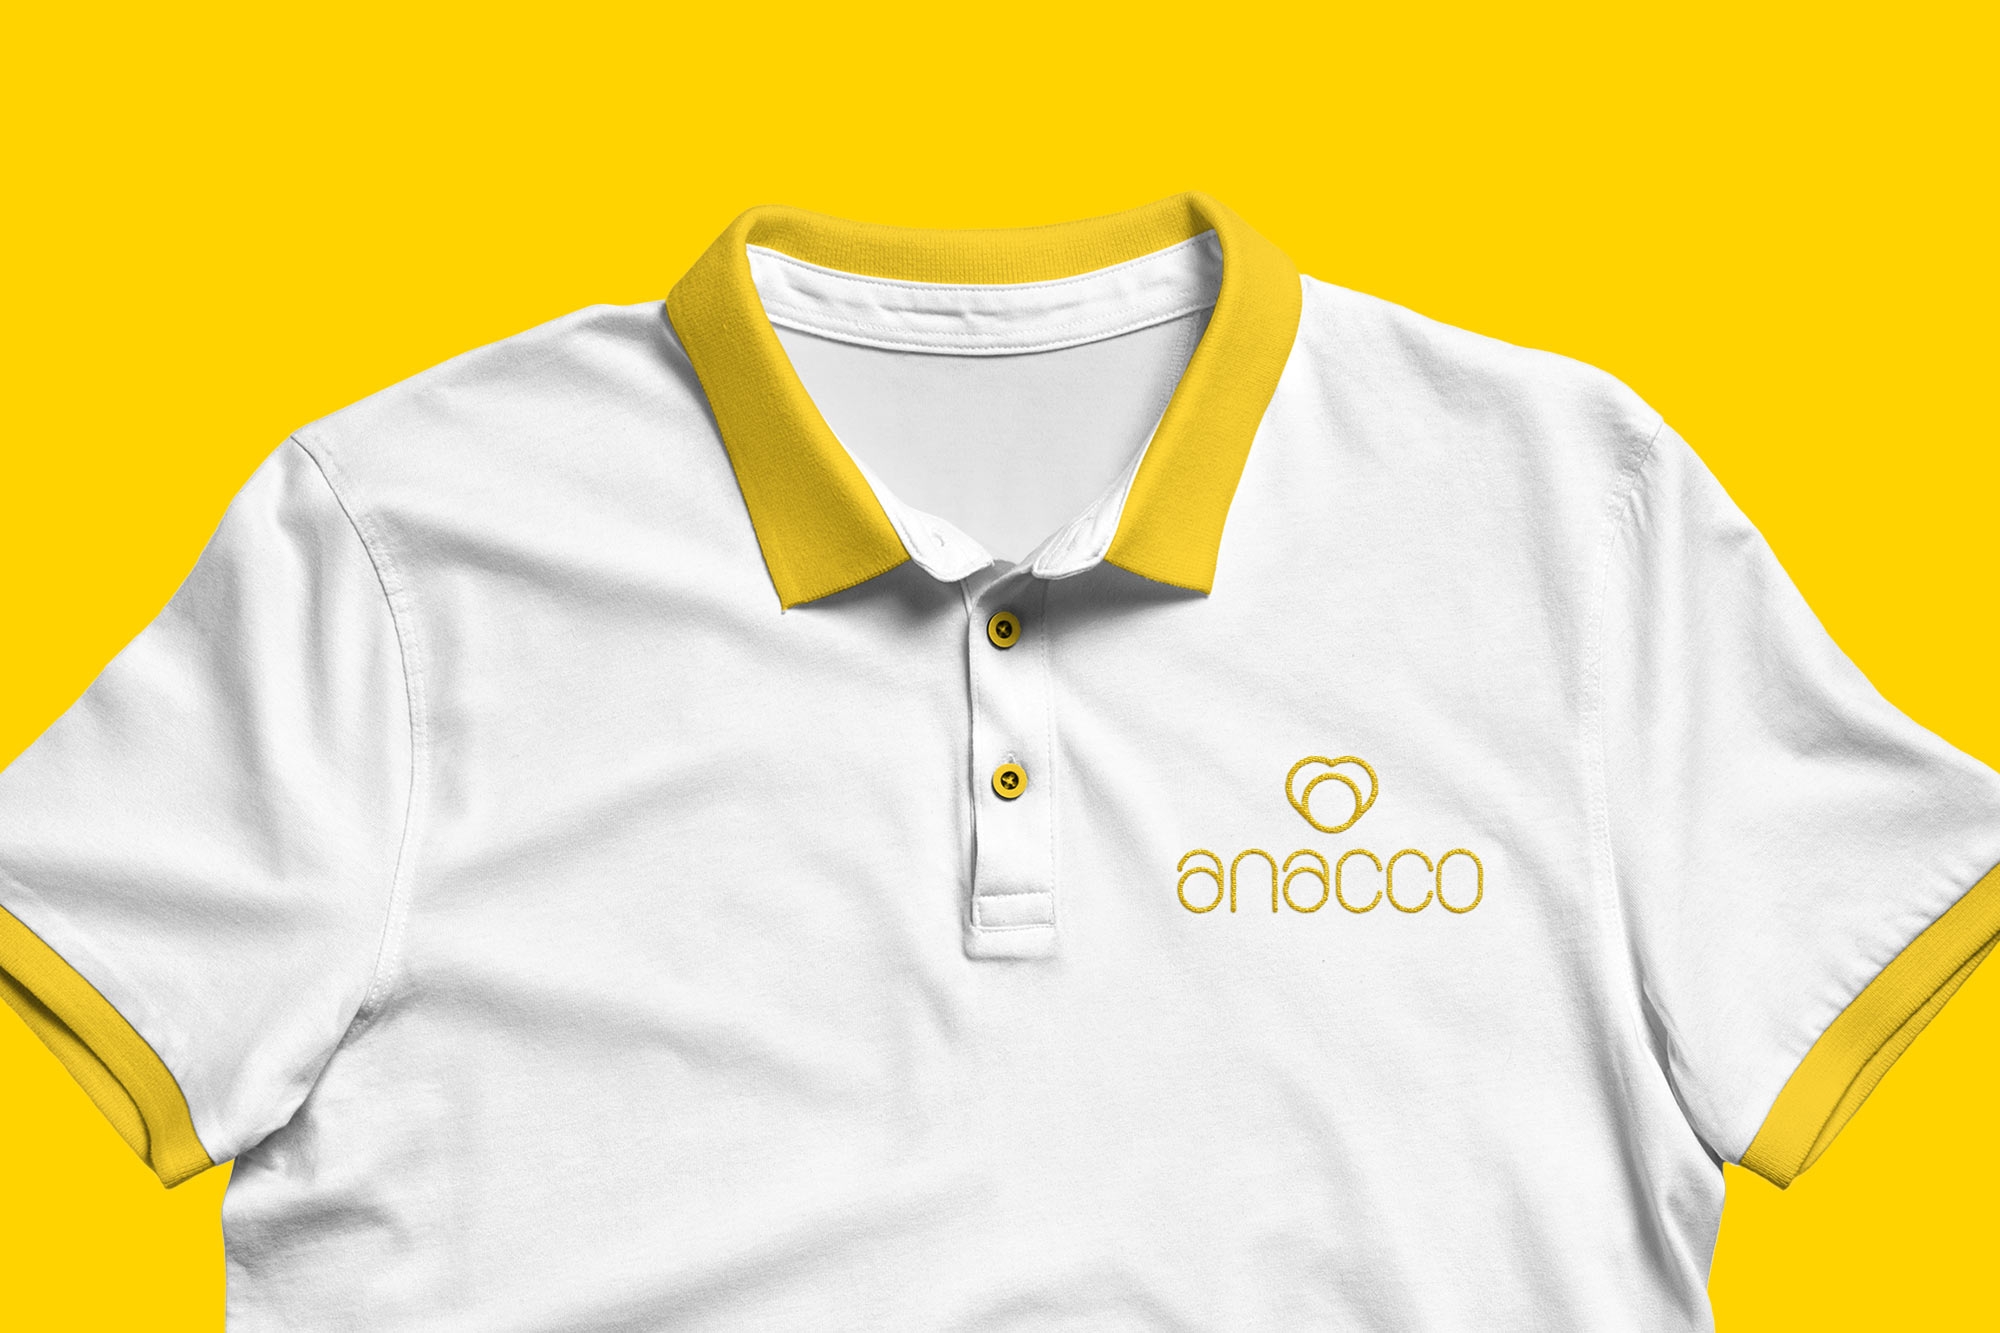 24 polo shirt of anacco tribox design